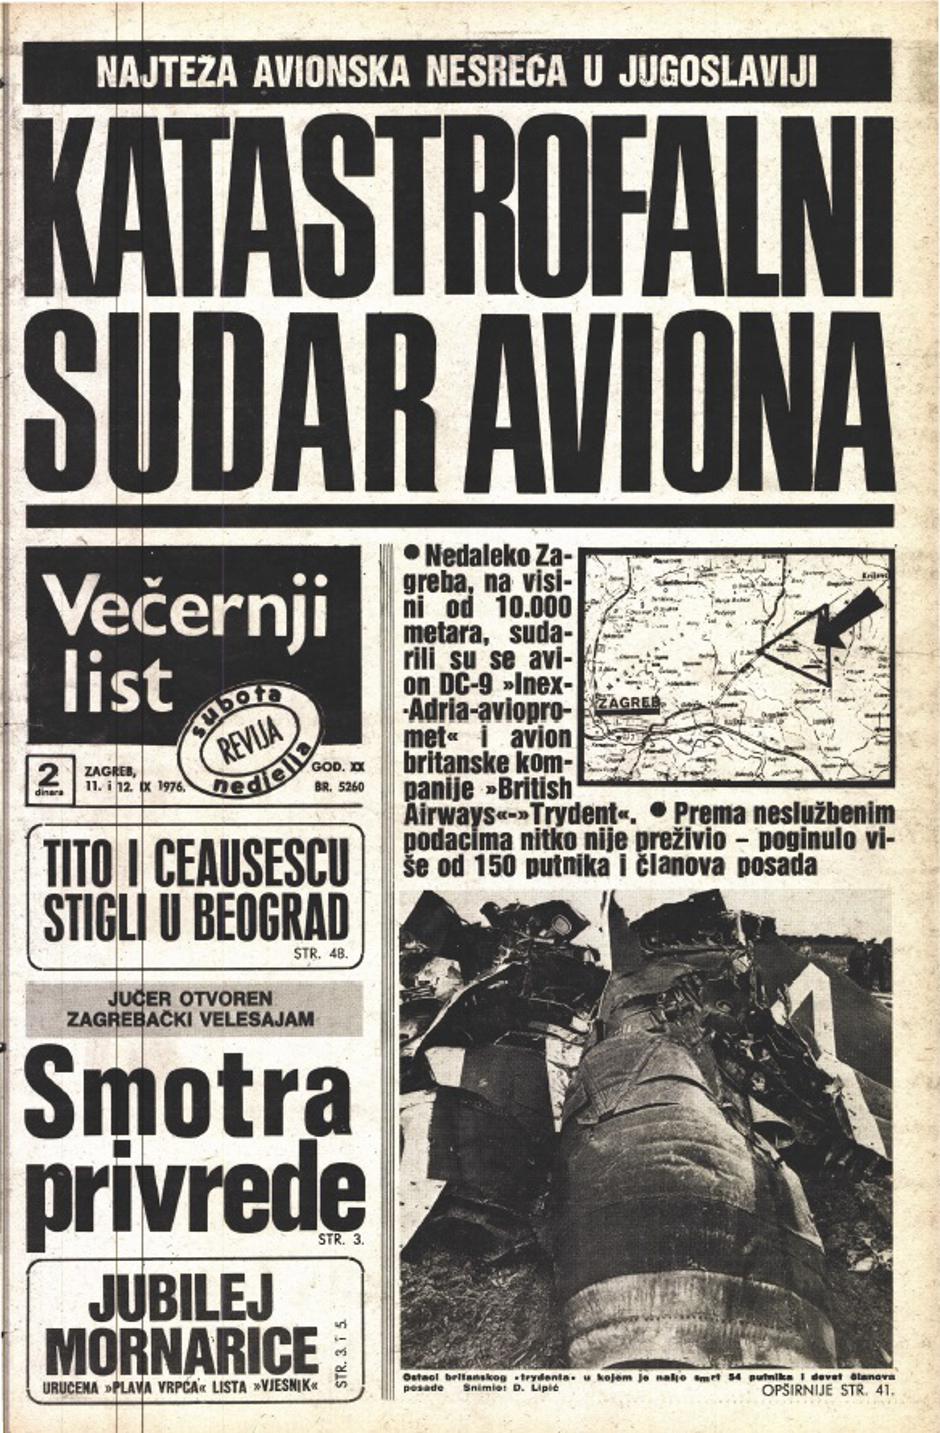 Sudar aviona iznad Vrbovca 1976.